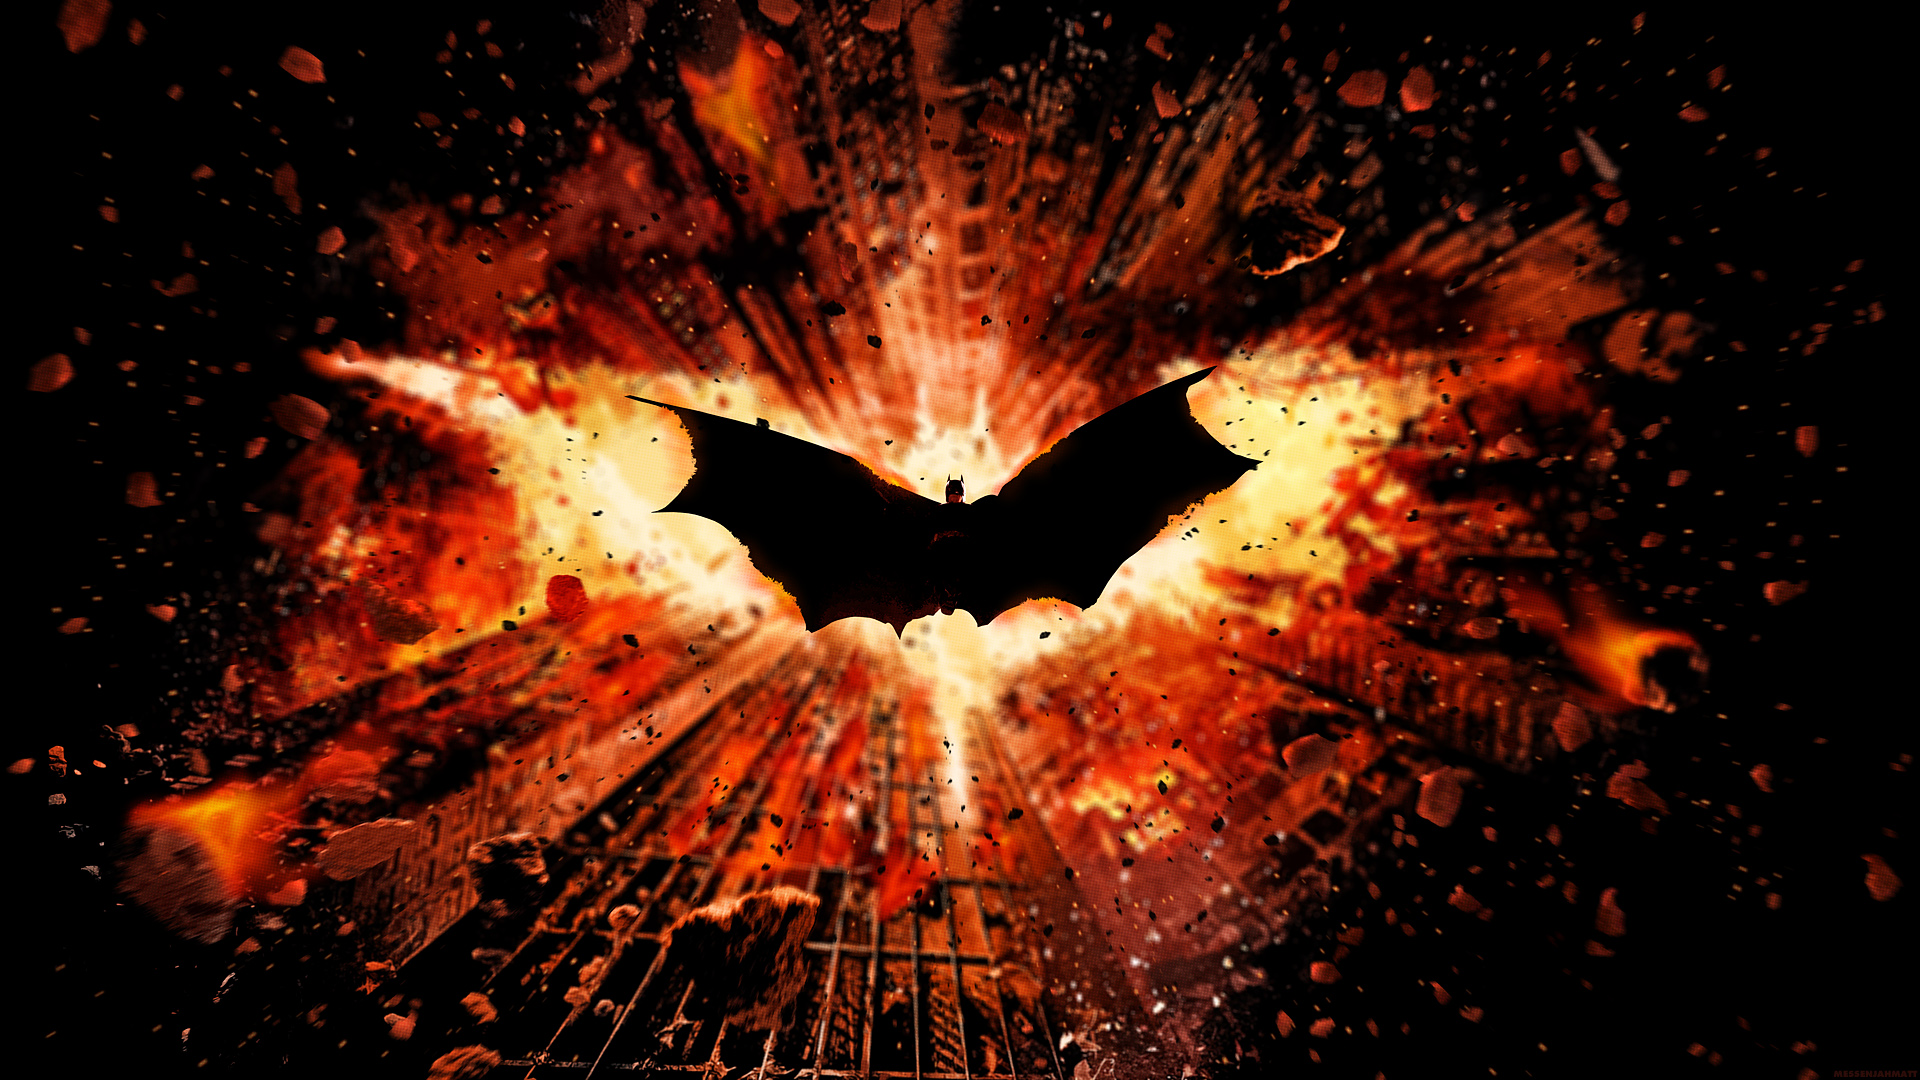 The Dark Knight Rises HD Wallpaper Background Image